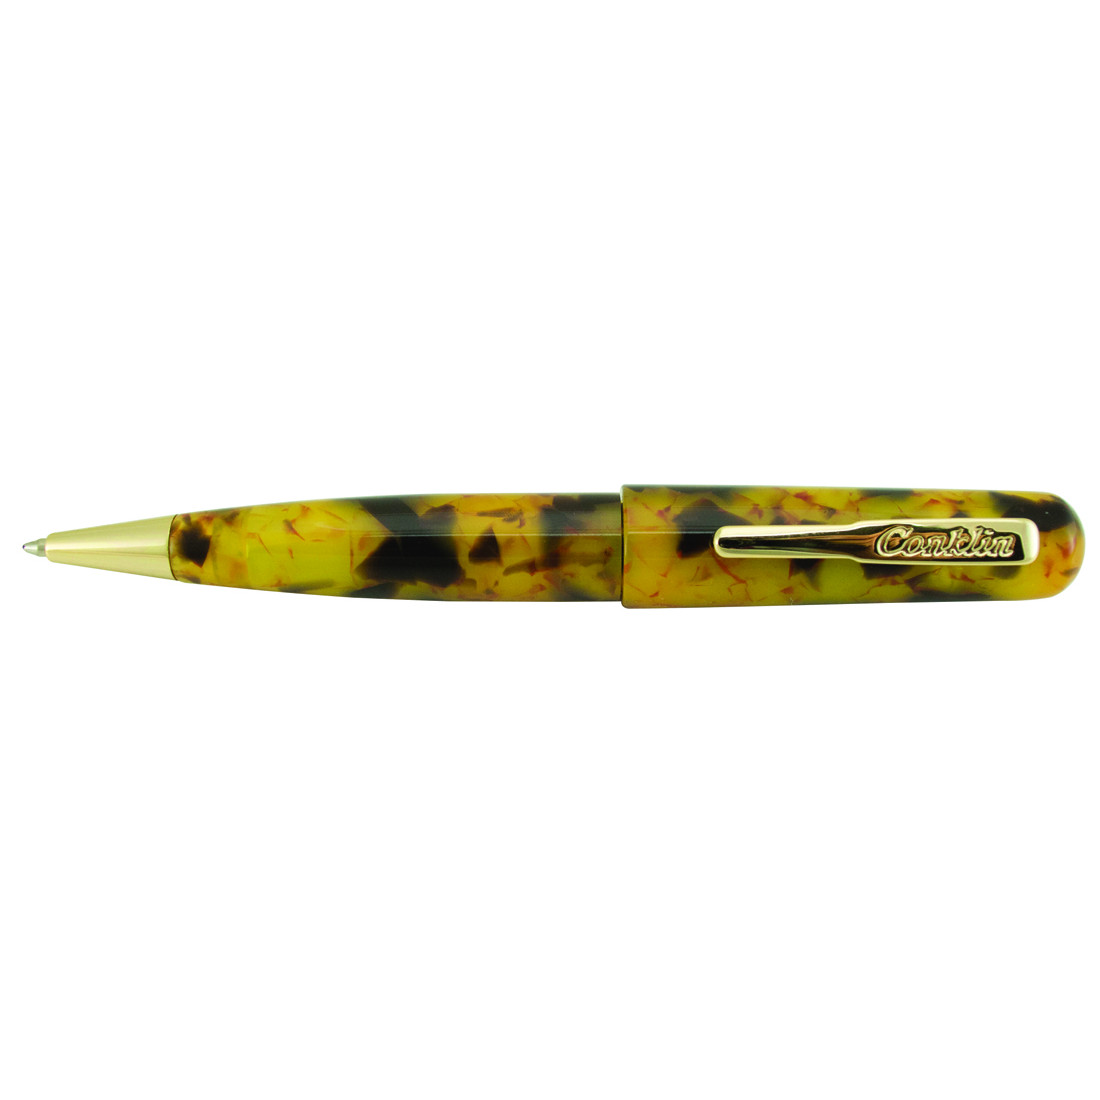 Conklin All American Ballpoint Pen - Tortoiseshell Gold Trim